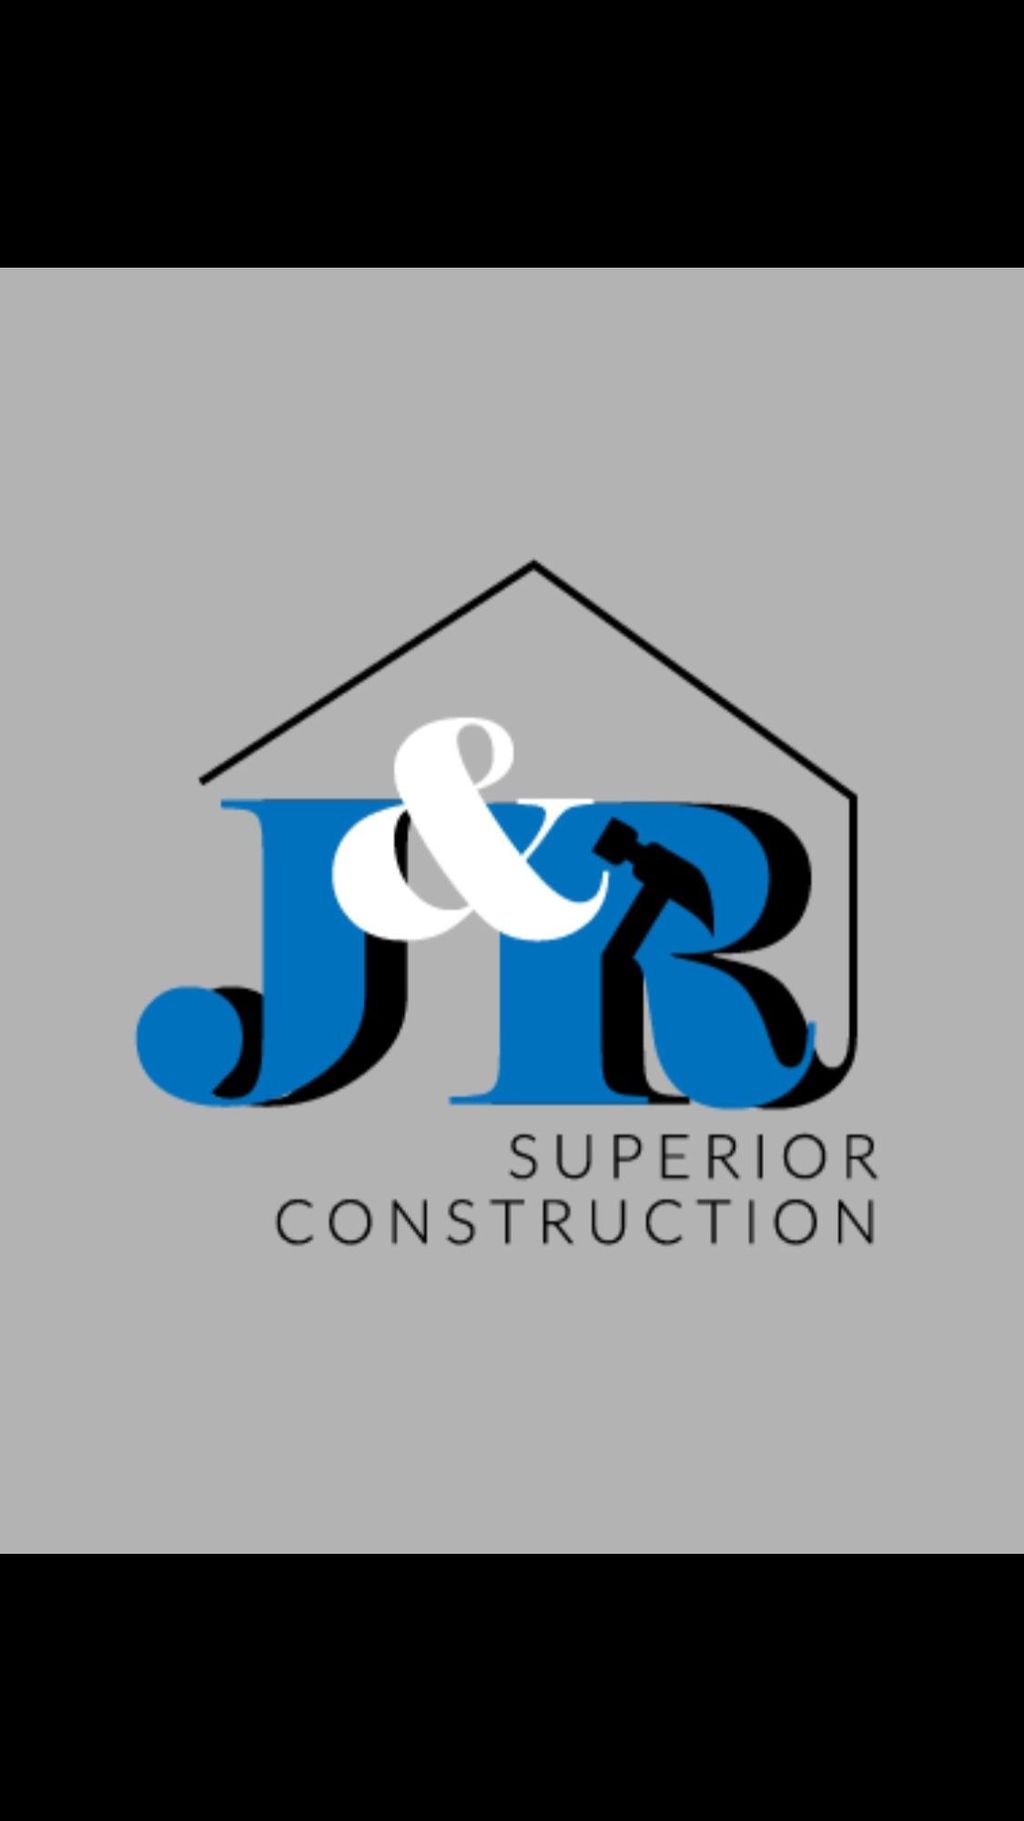 J&R Superior Construction